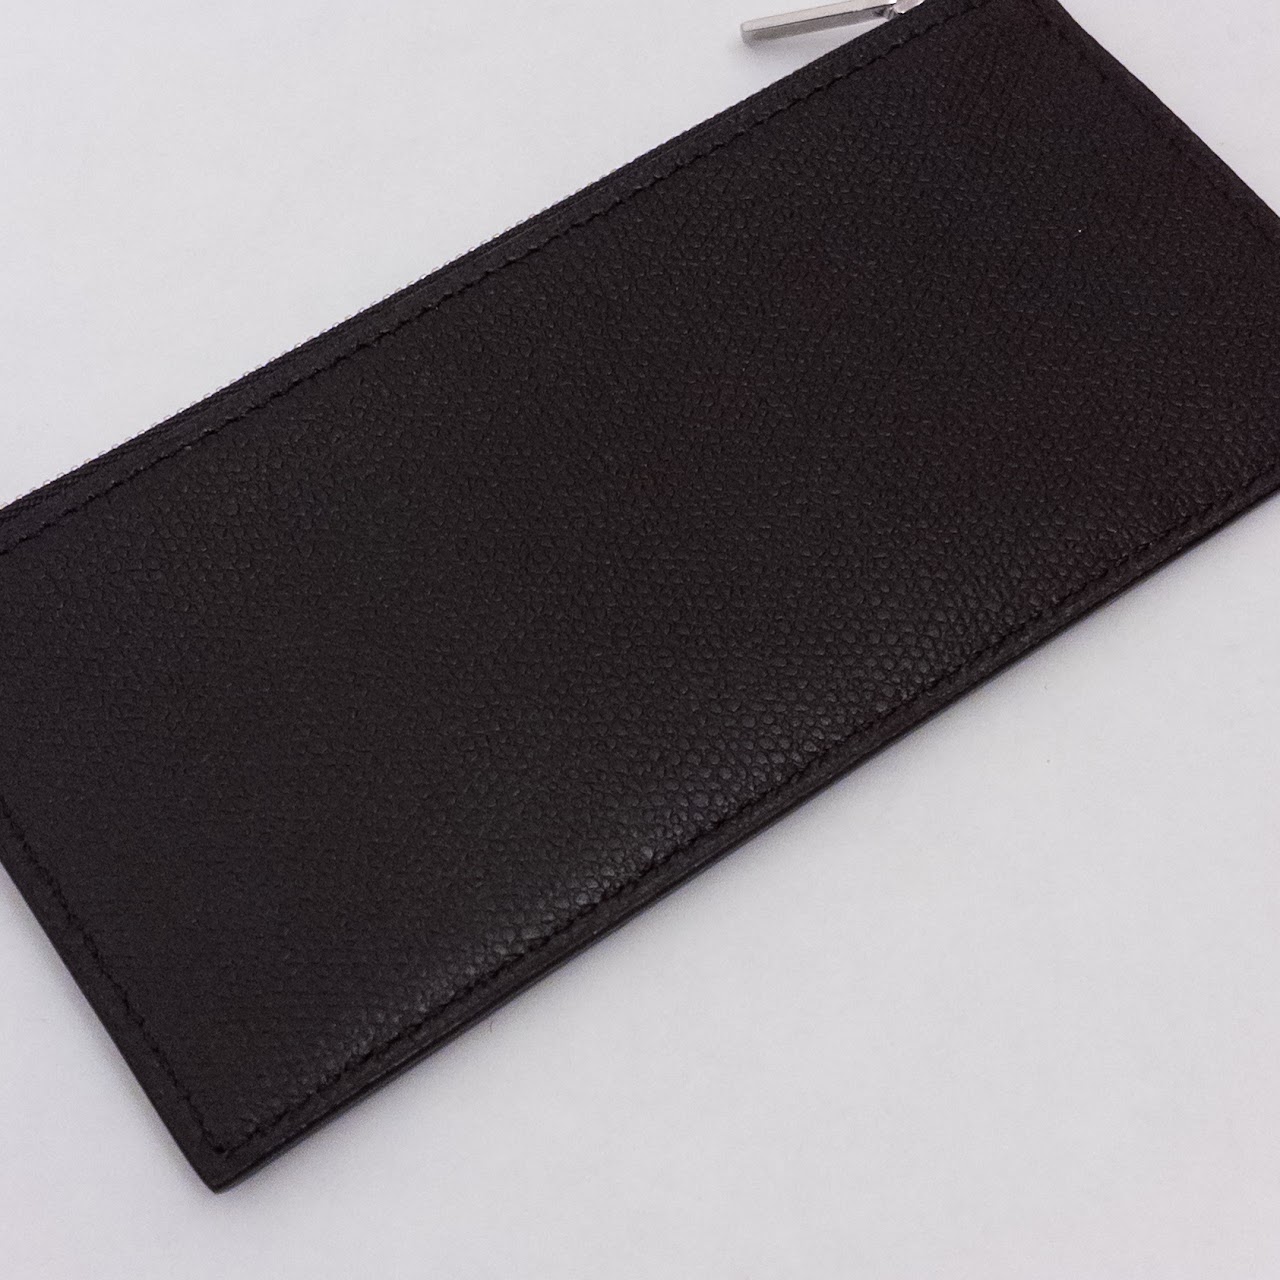 Rolex Leather Long Wallet